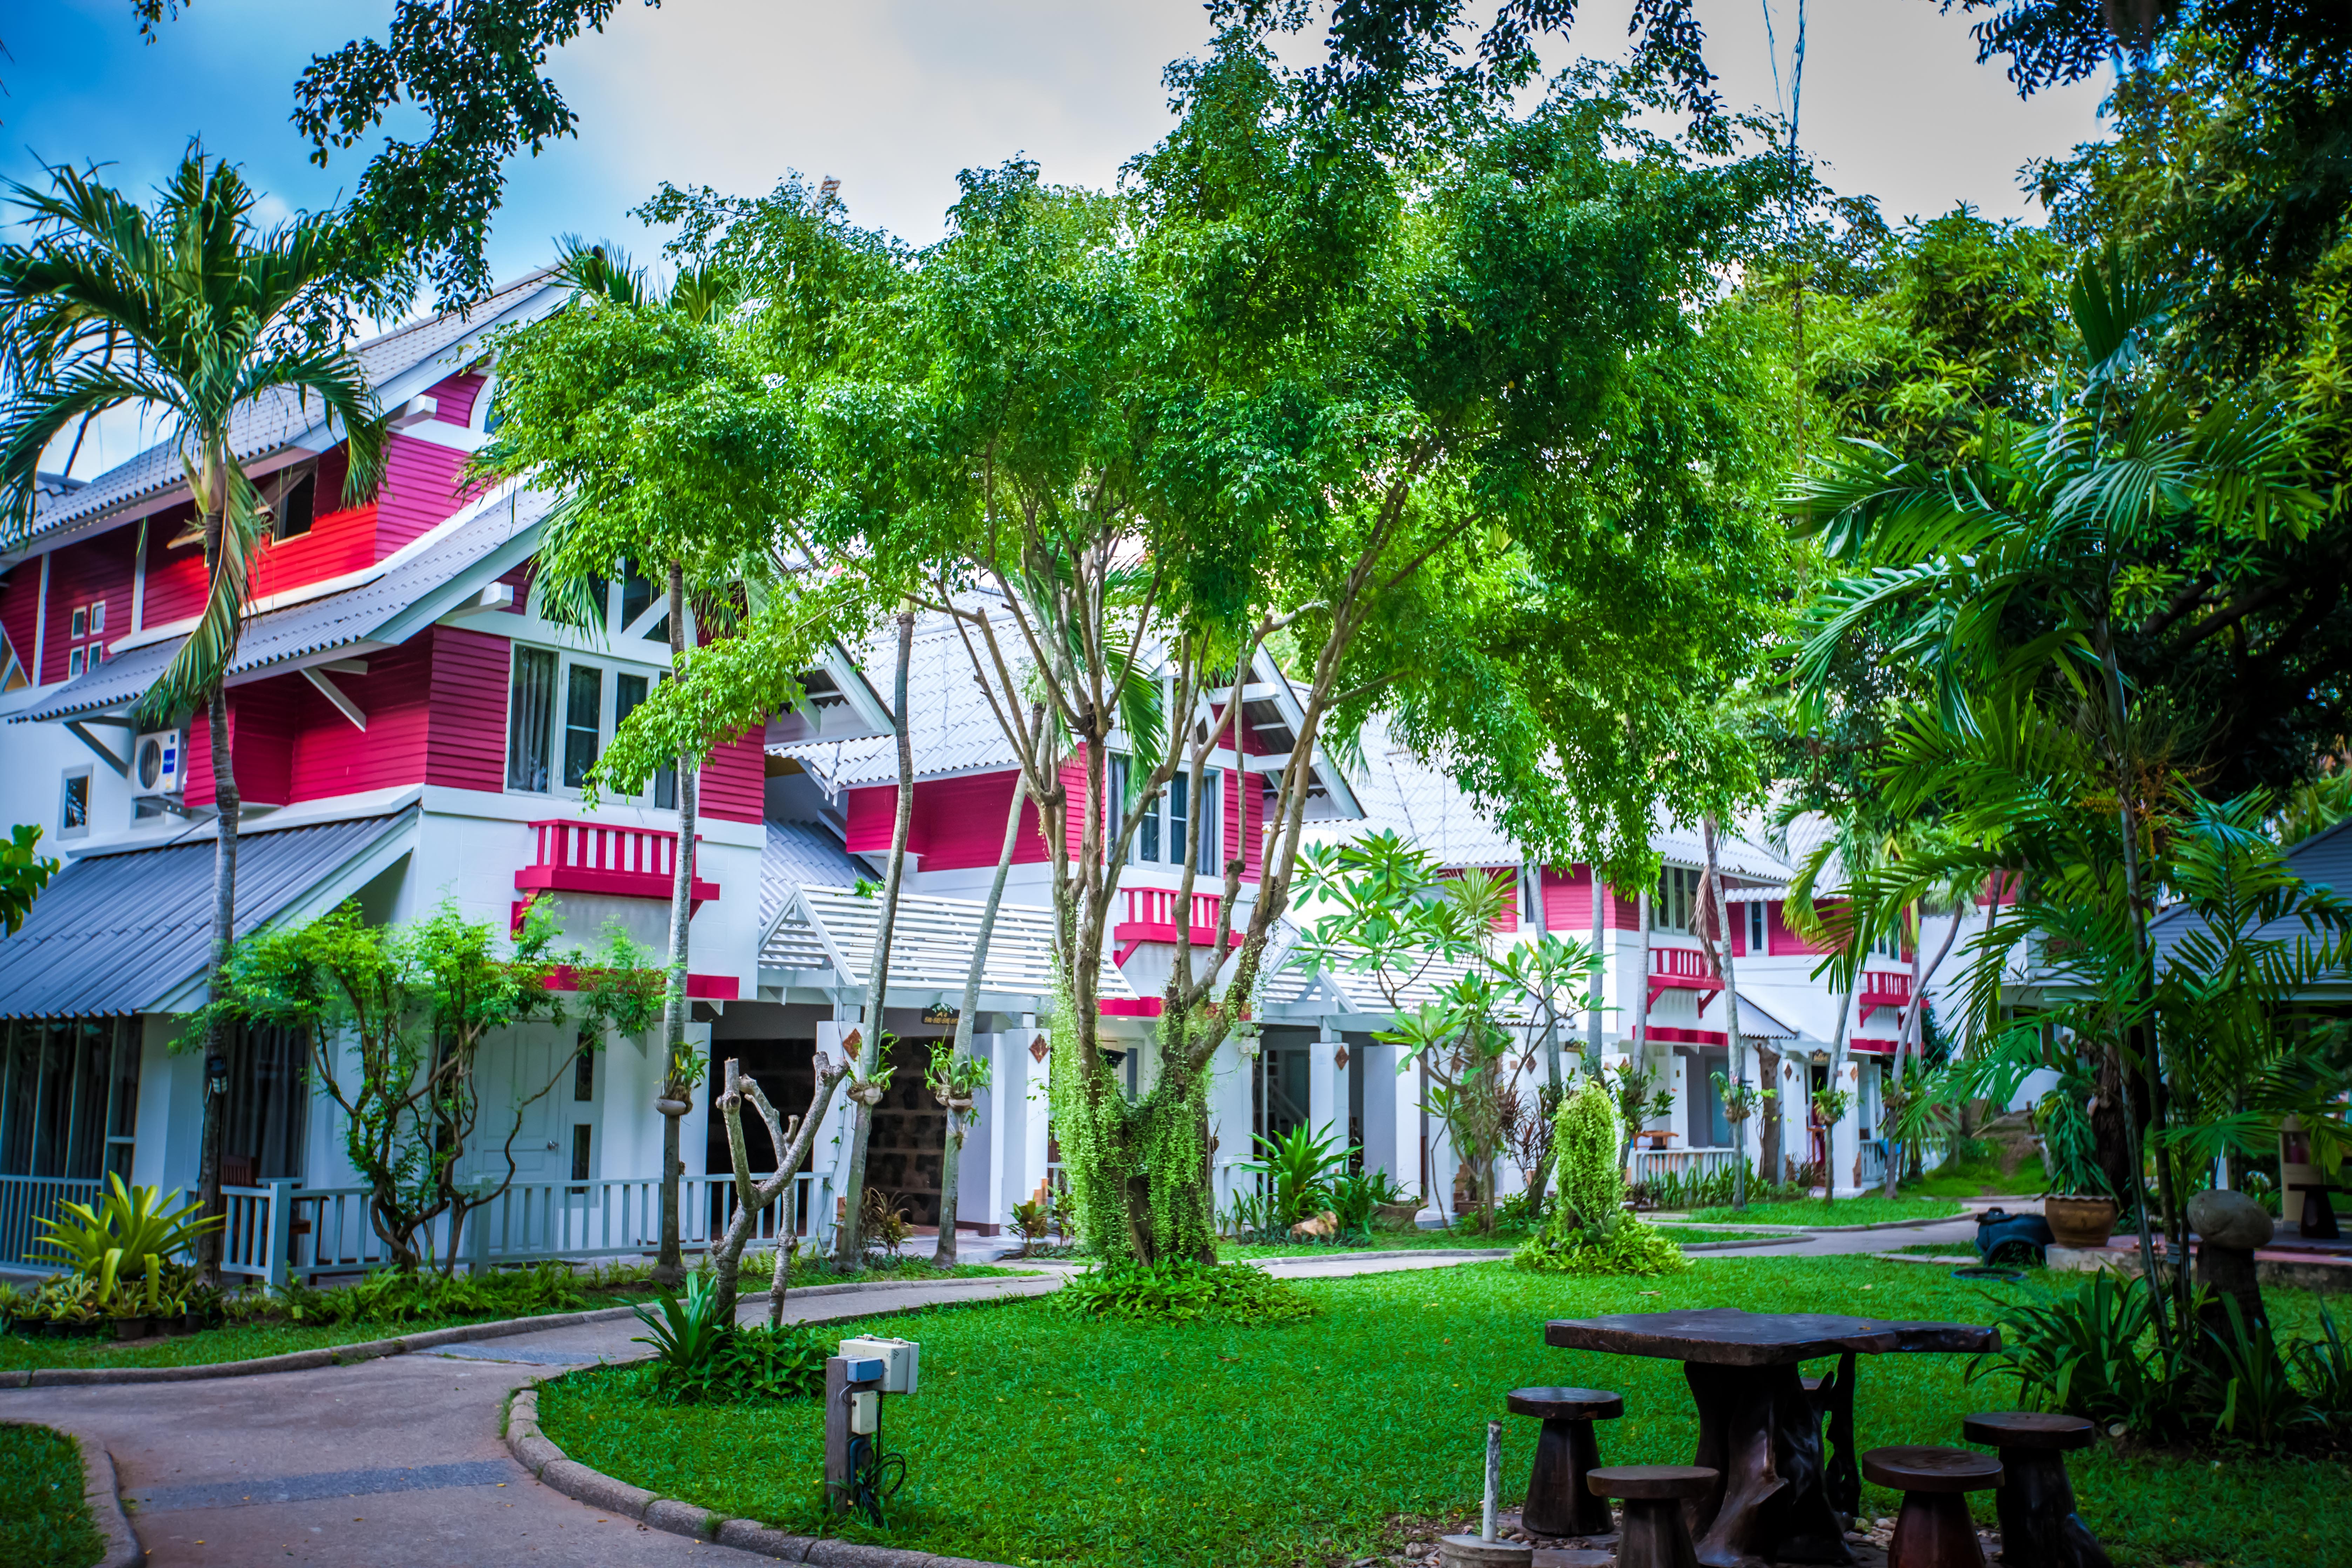 Купить путевку в паттайю. Отель натурал парк Резорт Паттайя. Тайланд натурал парк Резорт отель Паттайя. Нейчерал парк Паттайя. Натурал парк Резорт Паттайя тур.